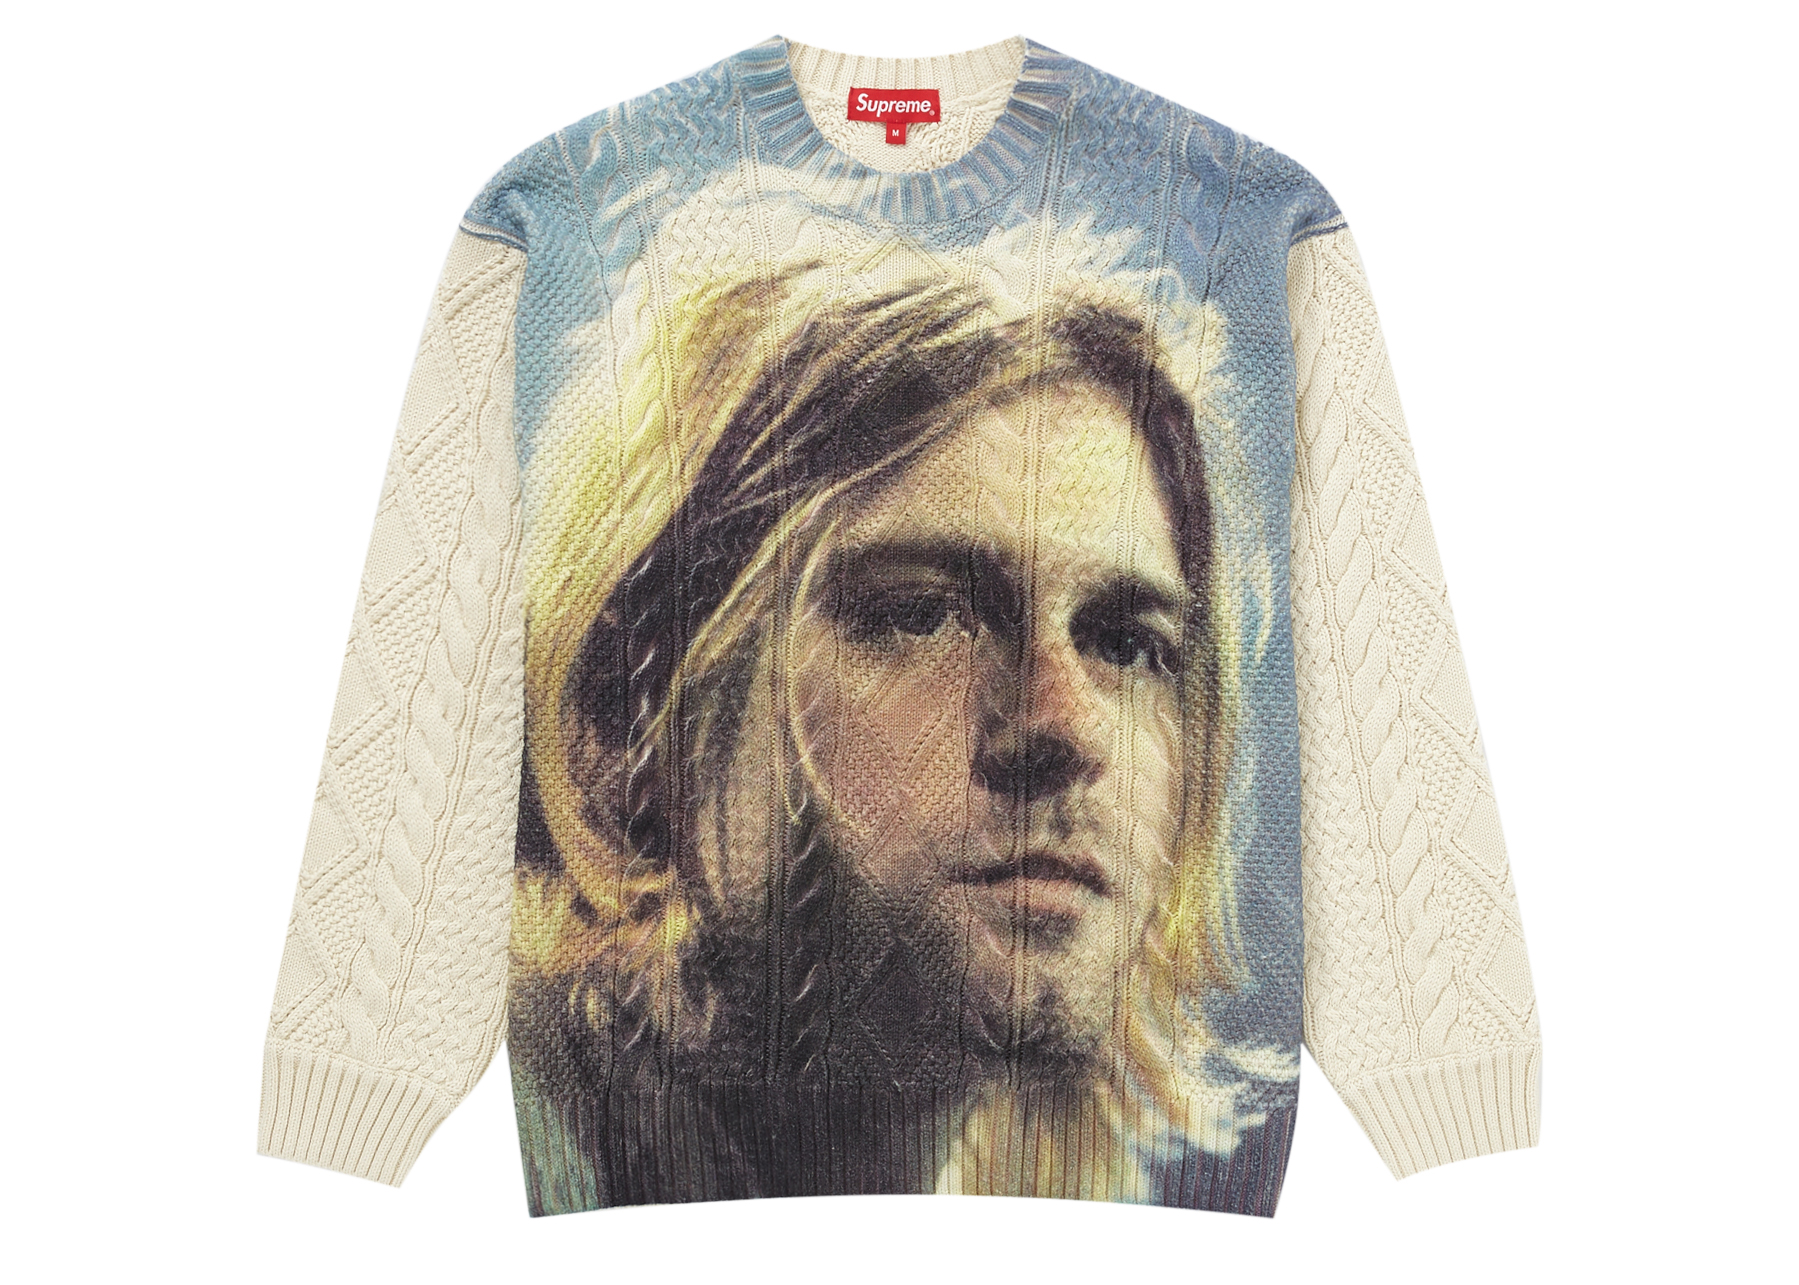 Supreme Kurt Cobain Sweater4万円で購入希望です